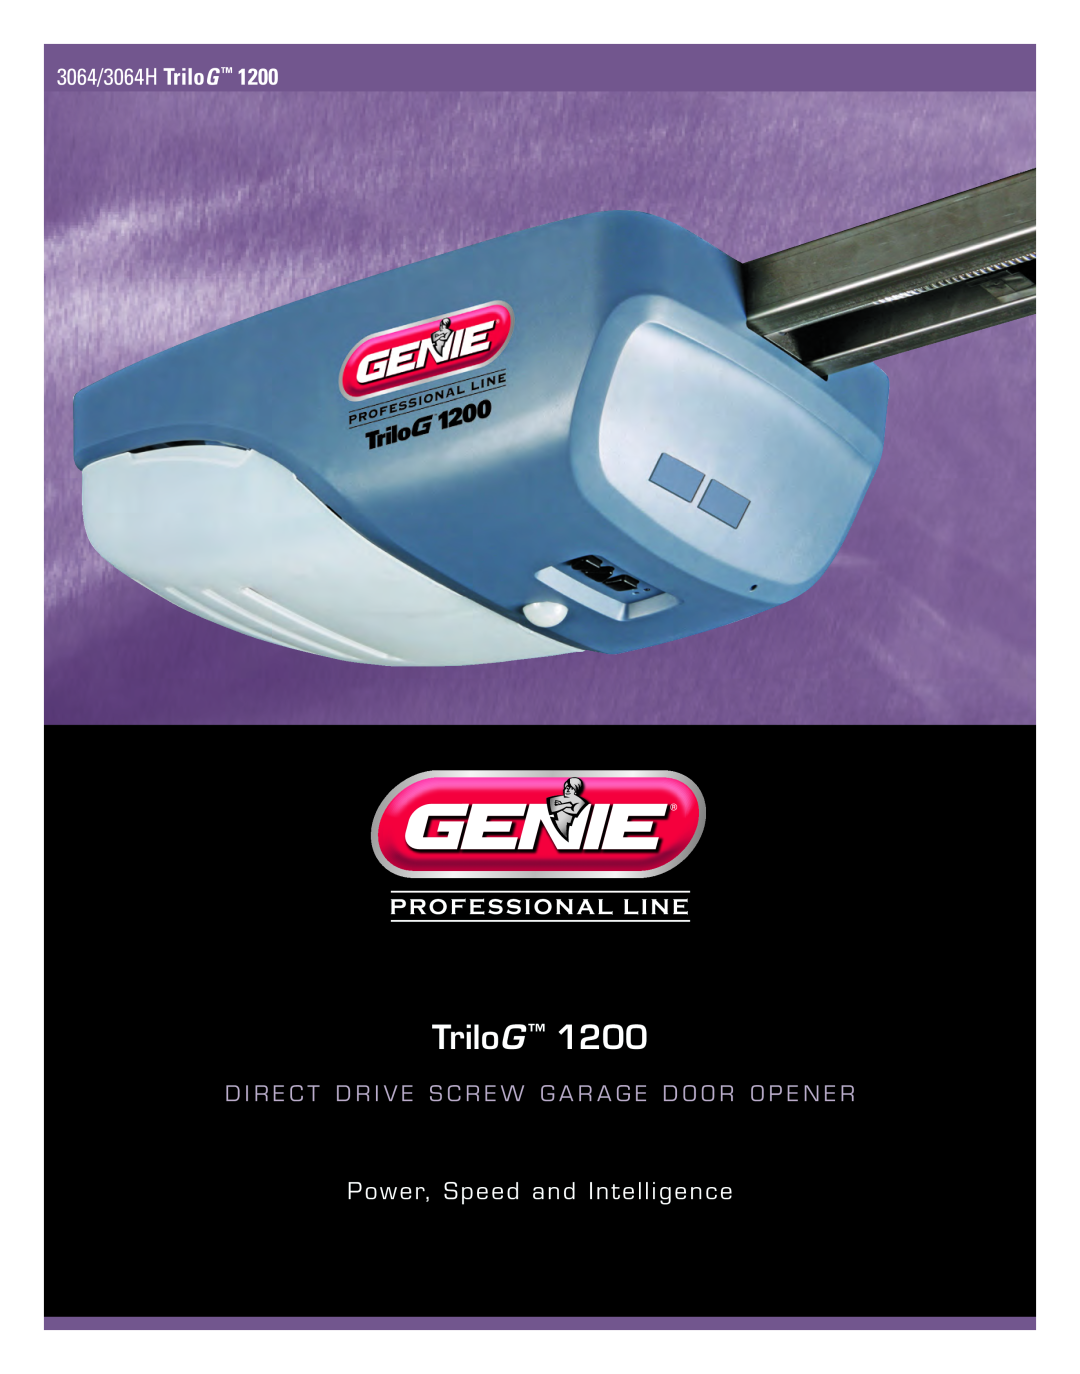 Genie 1200 manual 4024/4024H IntelliG, Intelligent Design, Quiet yet Powerful Performance 